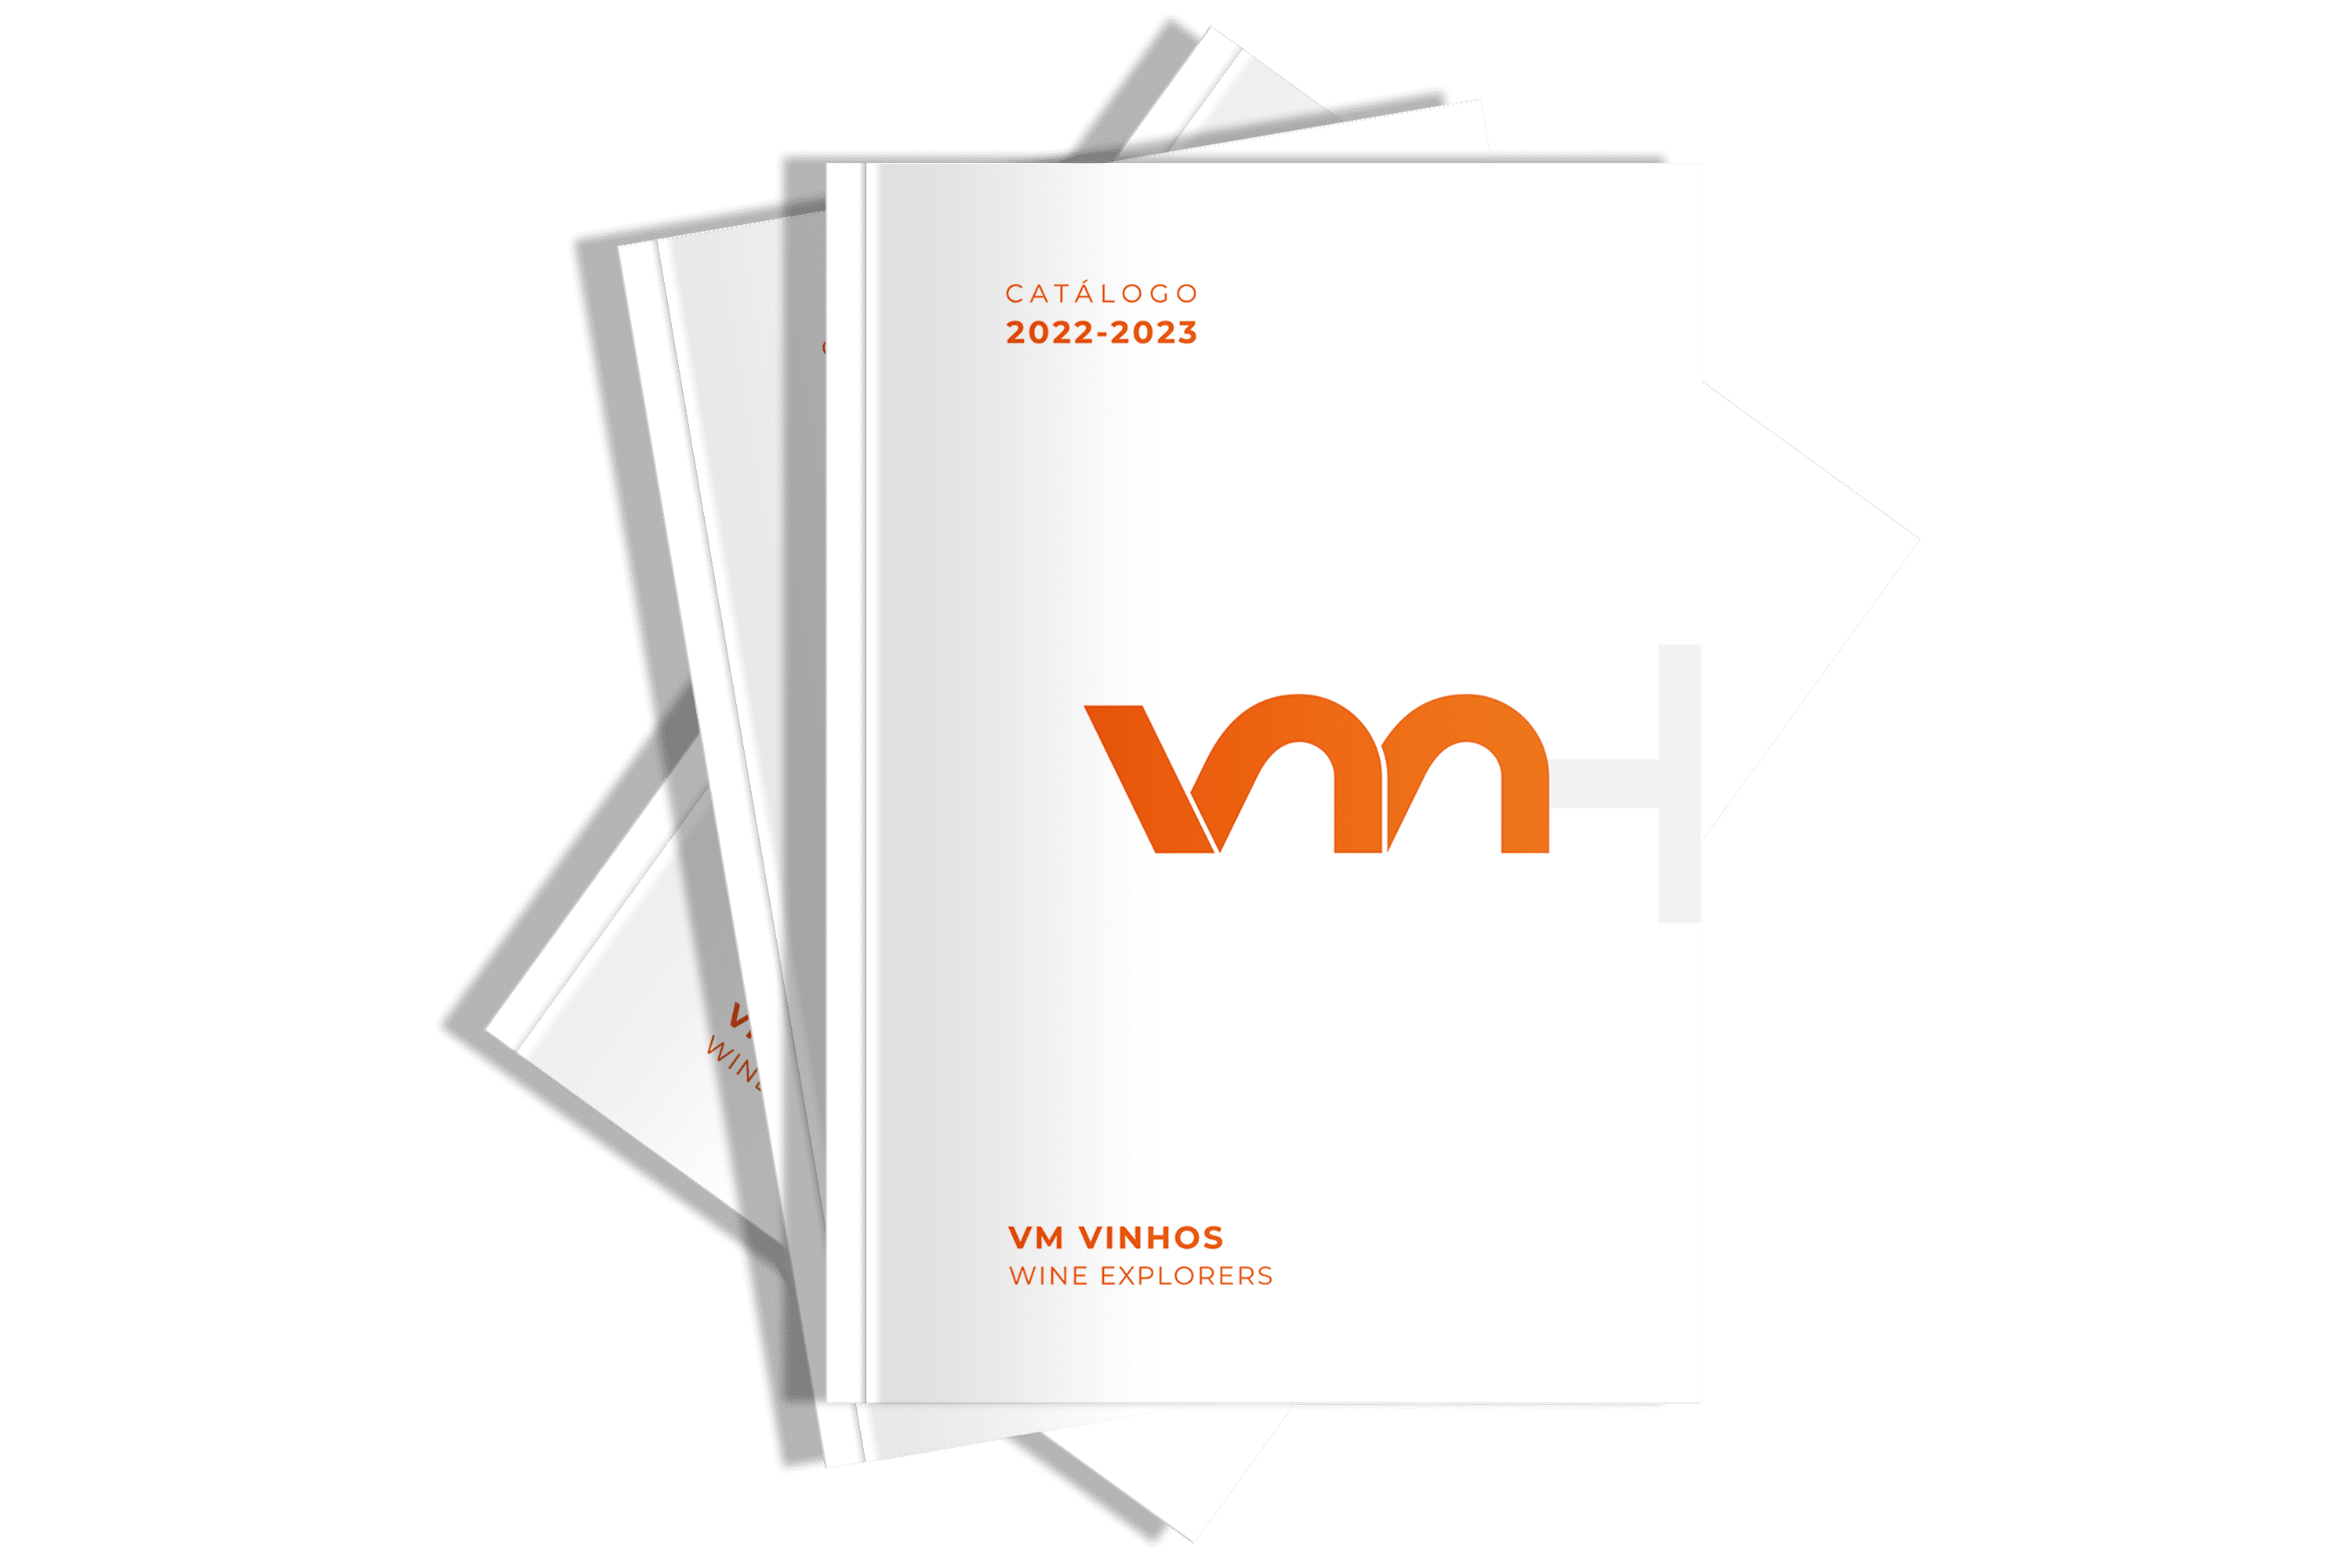 vmvinhos-catalogo-2022-2023